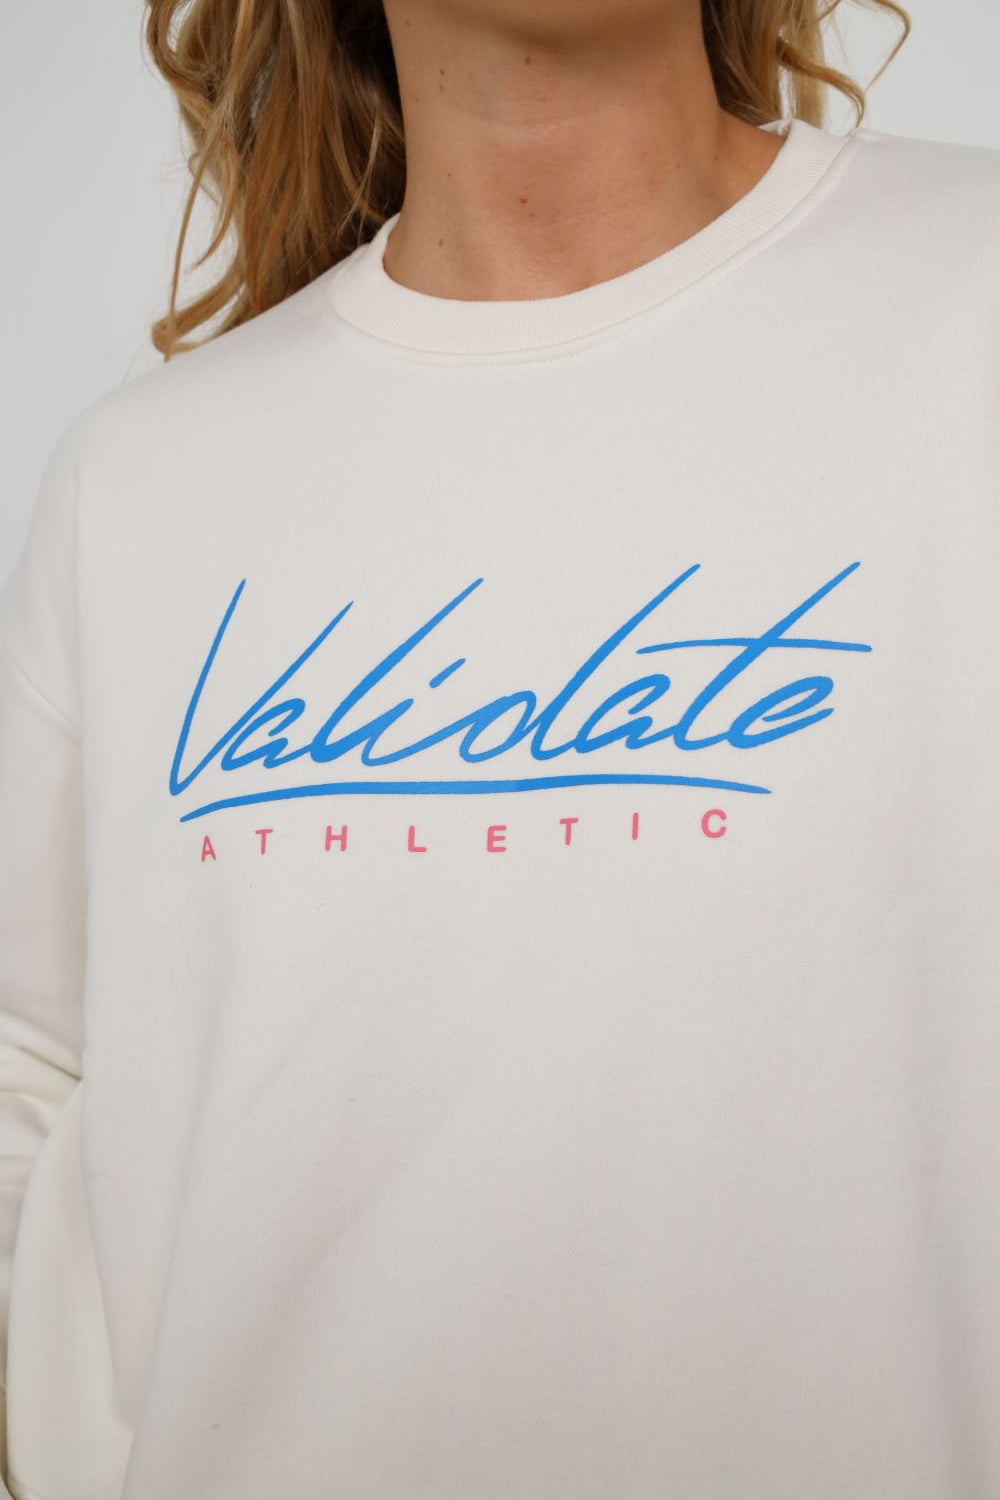 Validate White Emilia Sweatshirt | Validate Fashion Hoodies & Sweatshirts | Hertfordshire